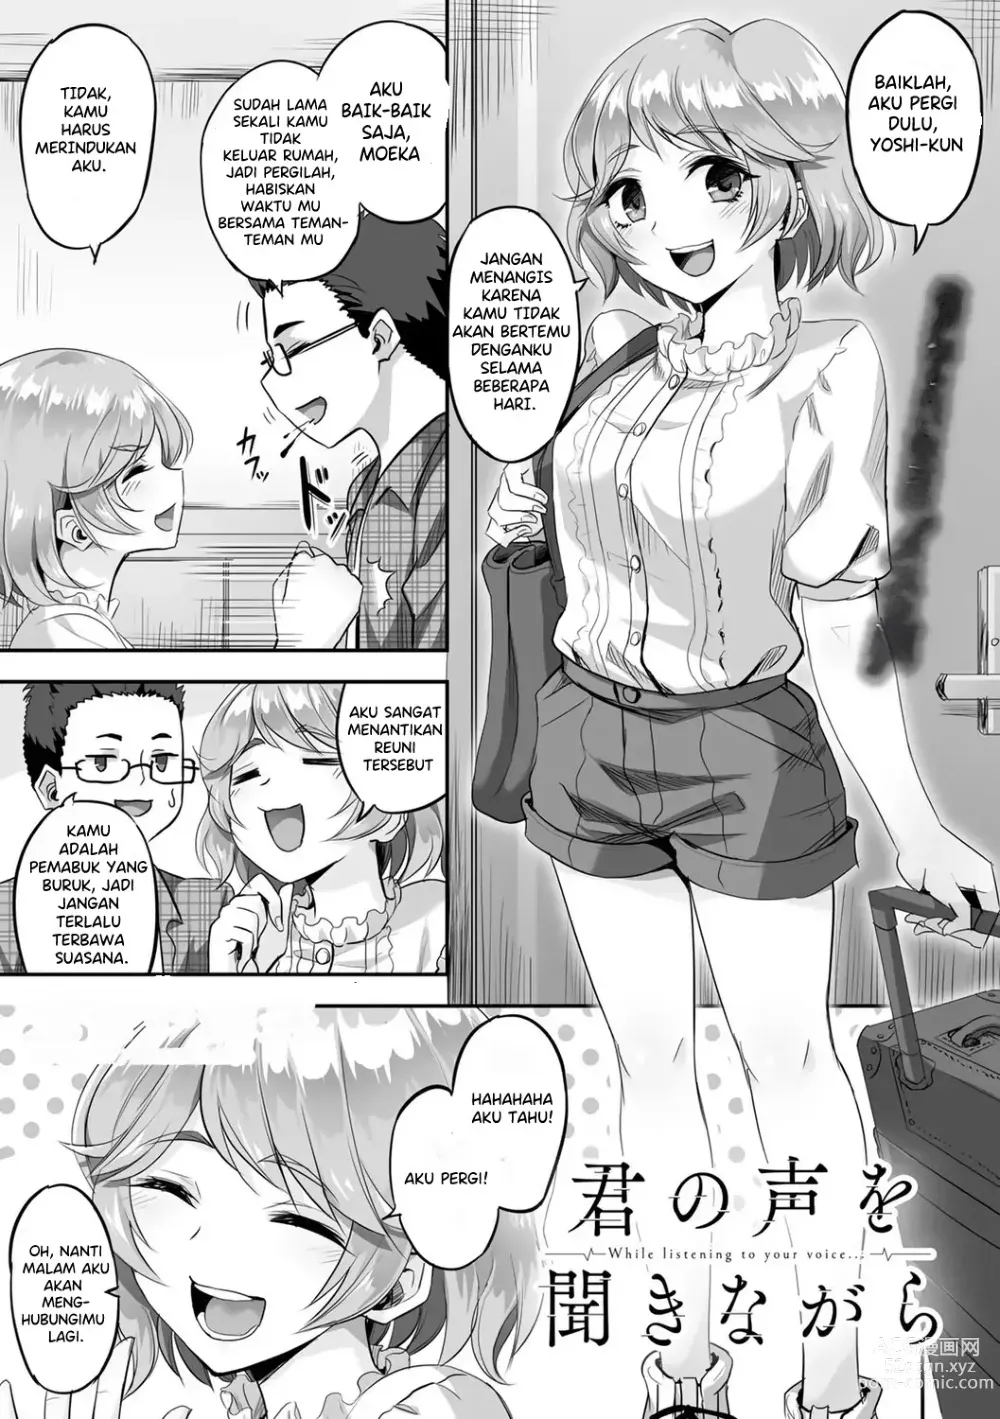 Page 1 of manga Kimi no Koe o Kinagara - While listening to your voice...